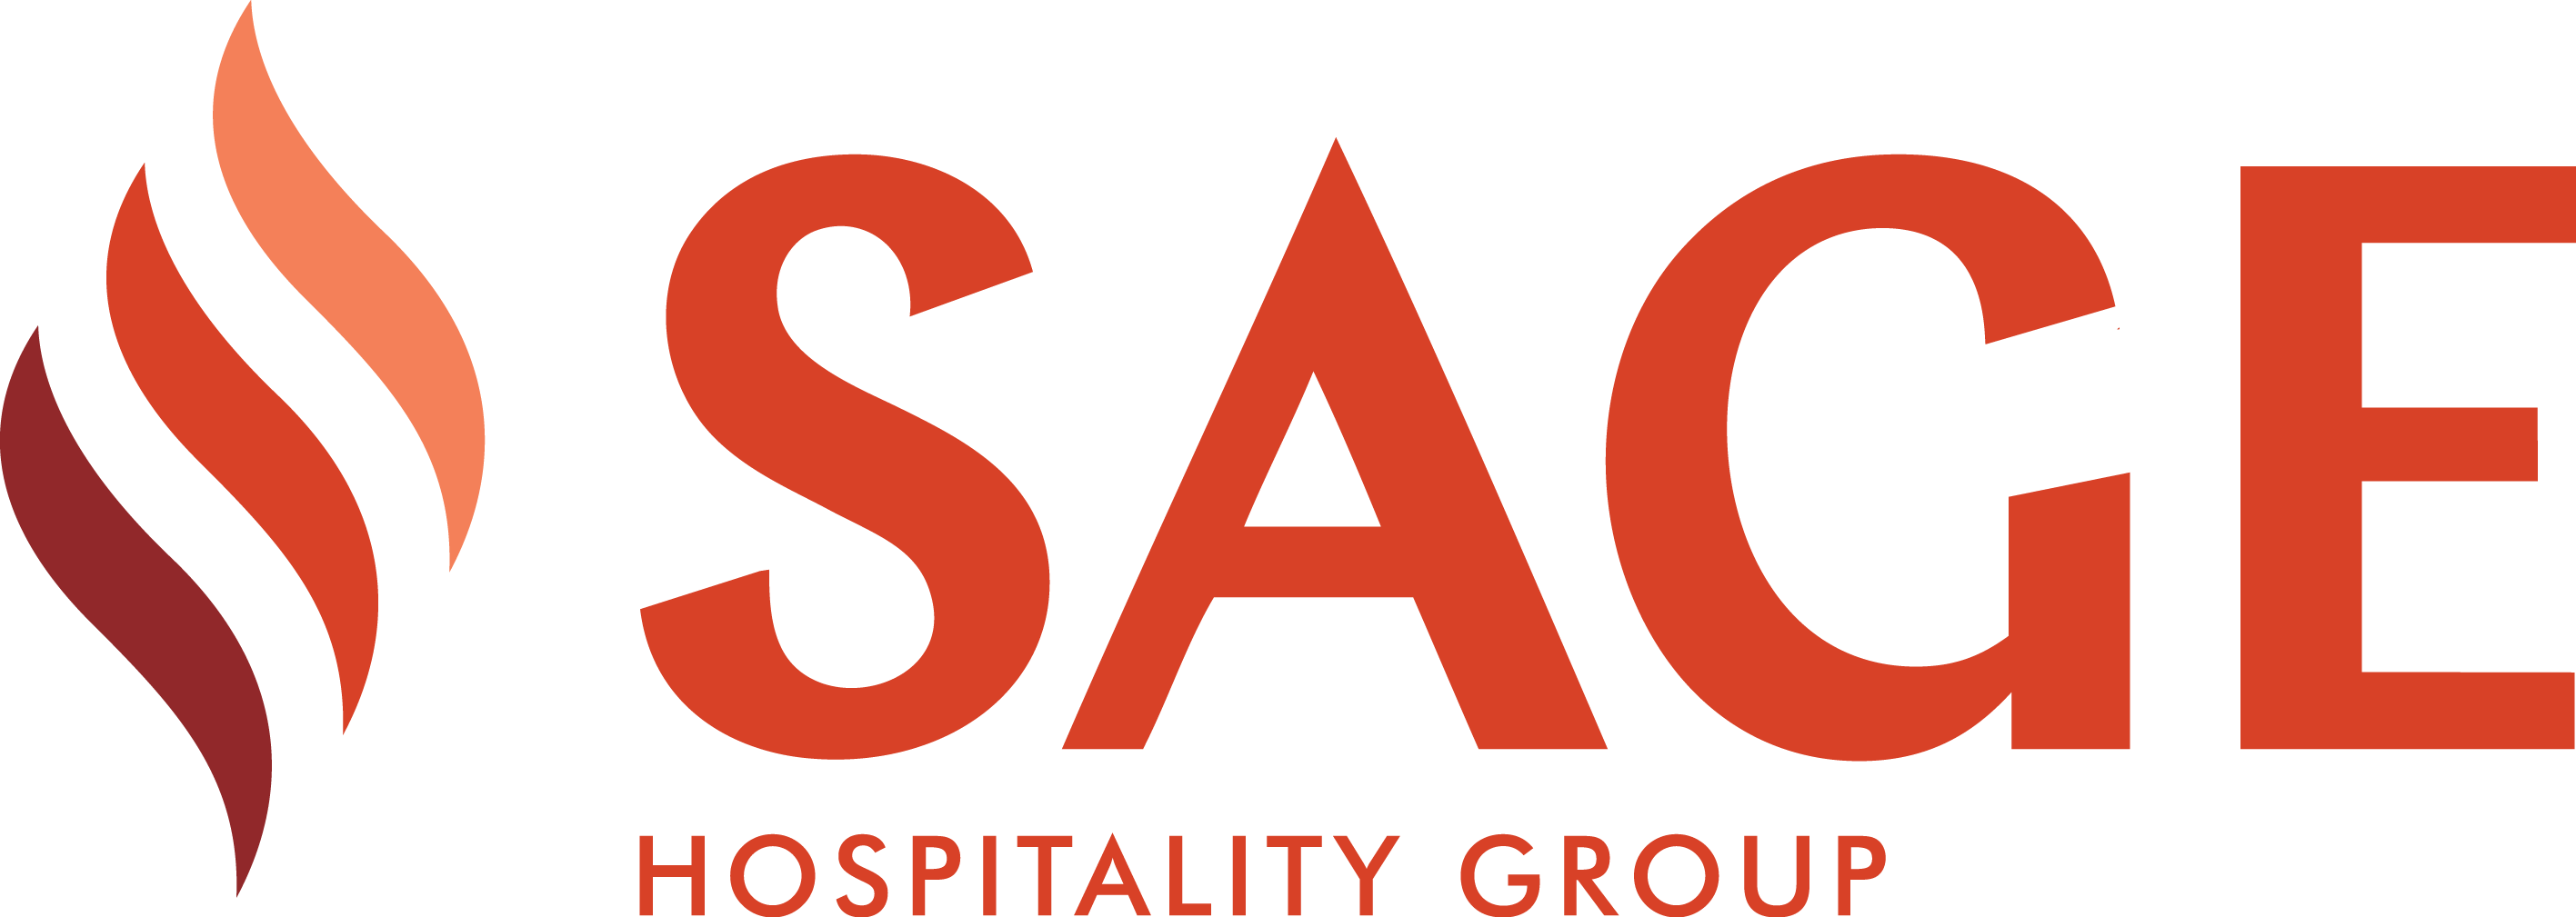 Sage Hospitality Group logo